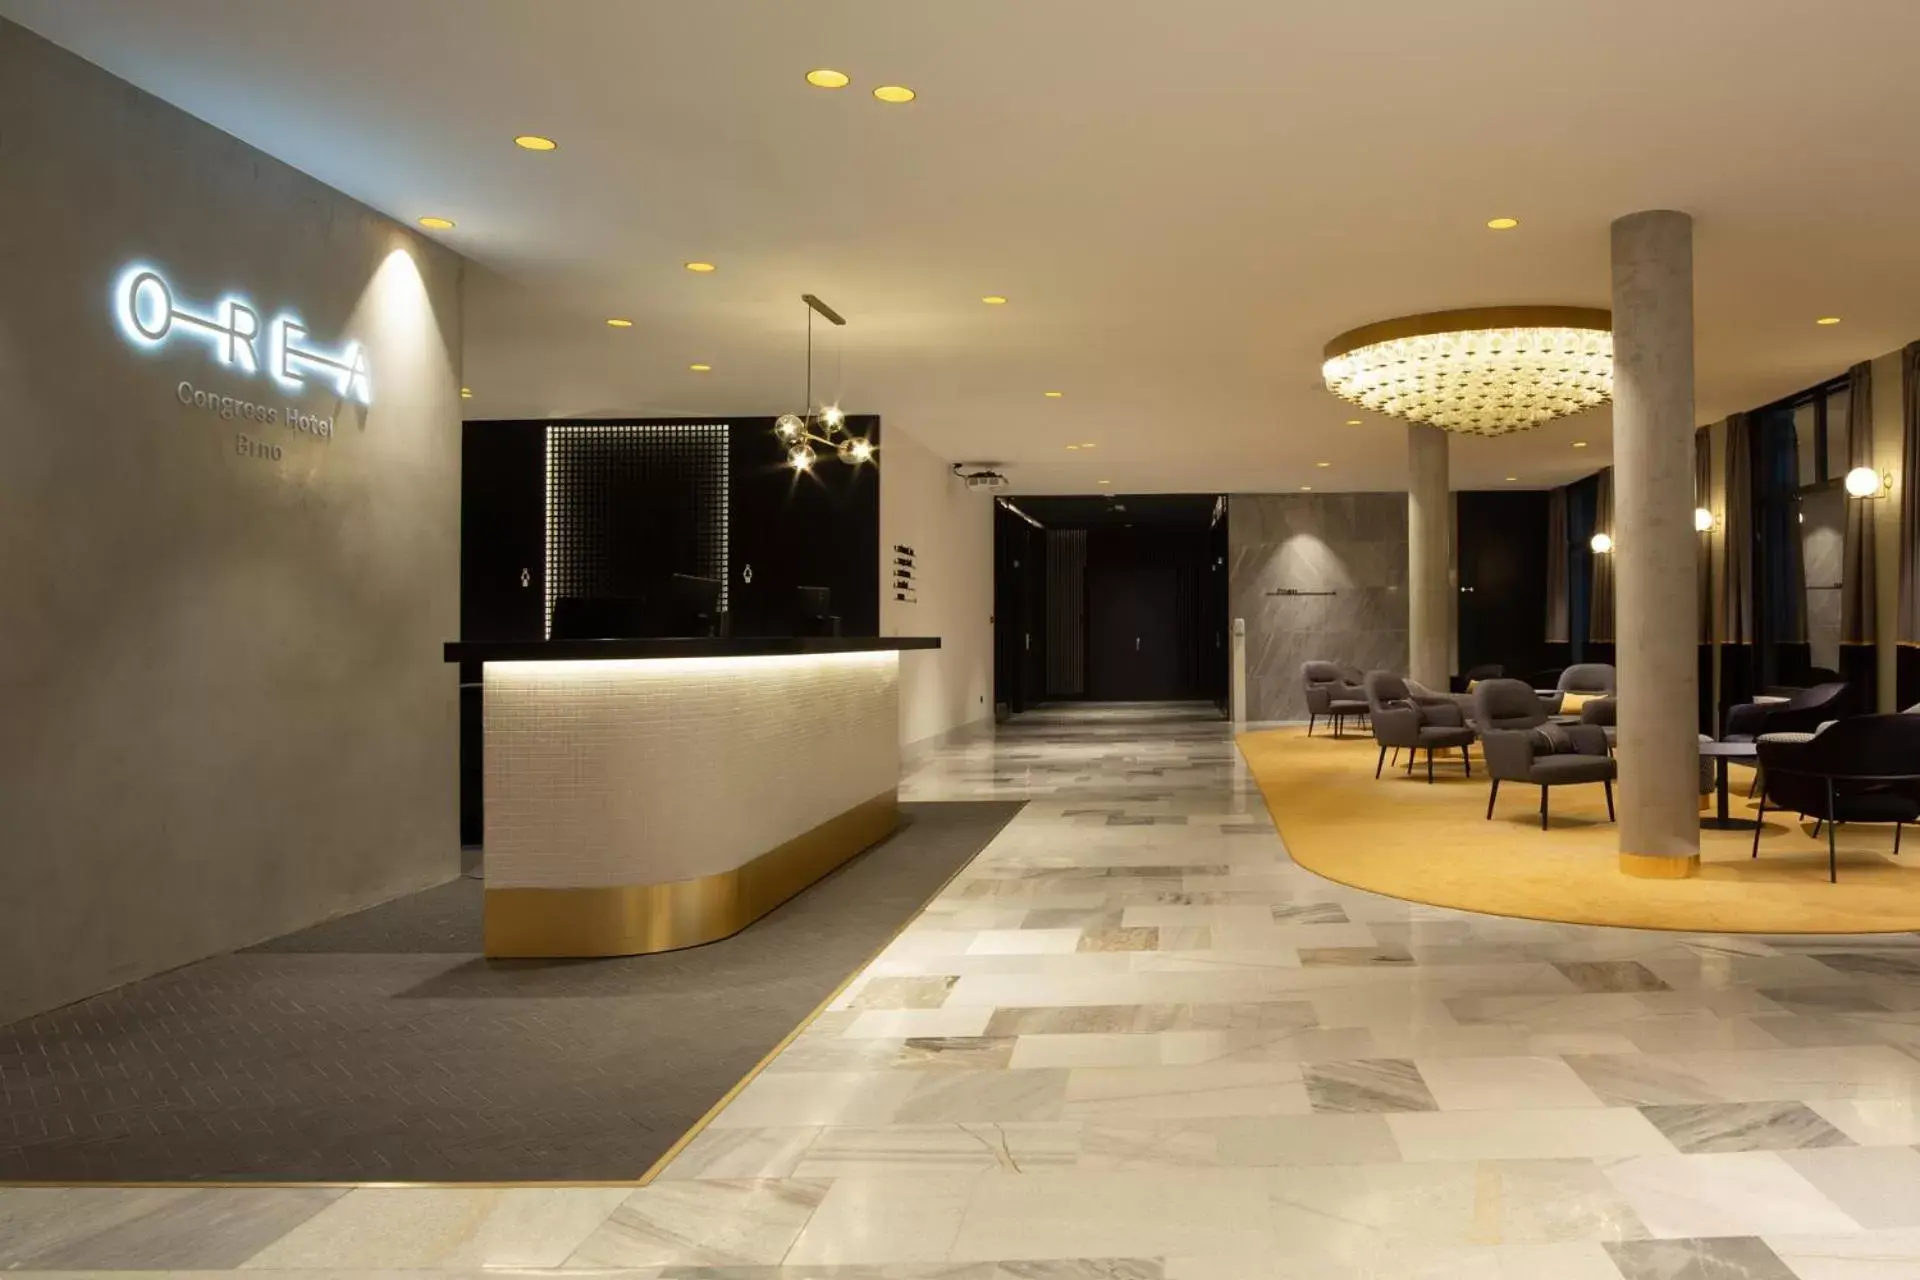 Lobby or reception, Lobby/Reception in OREA Congress Hotel Brno